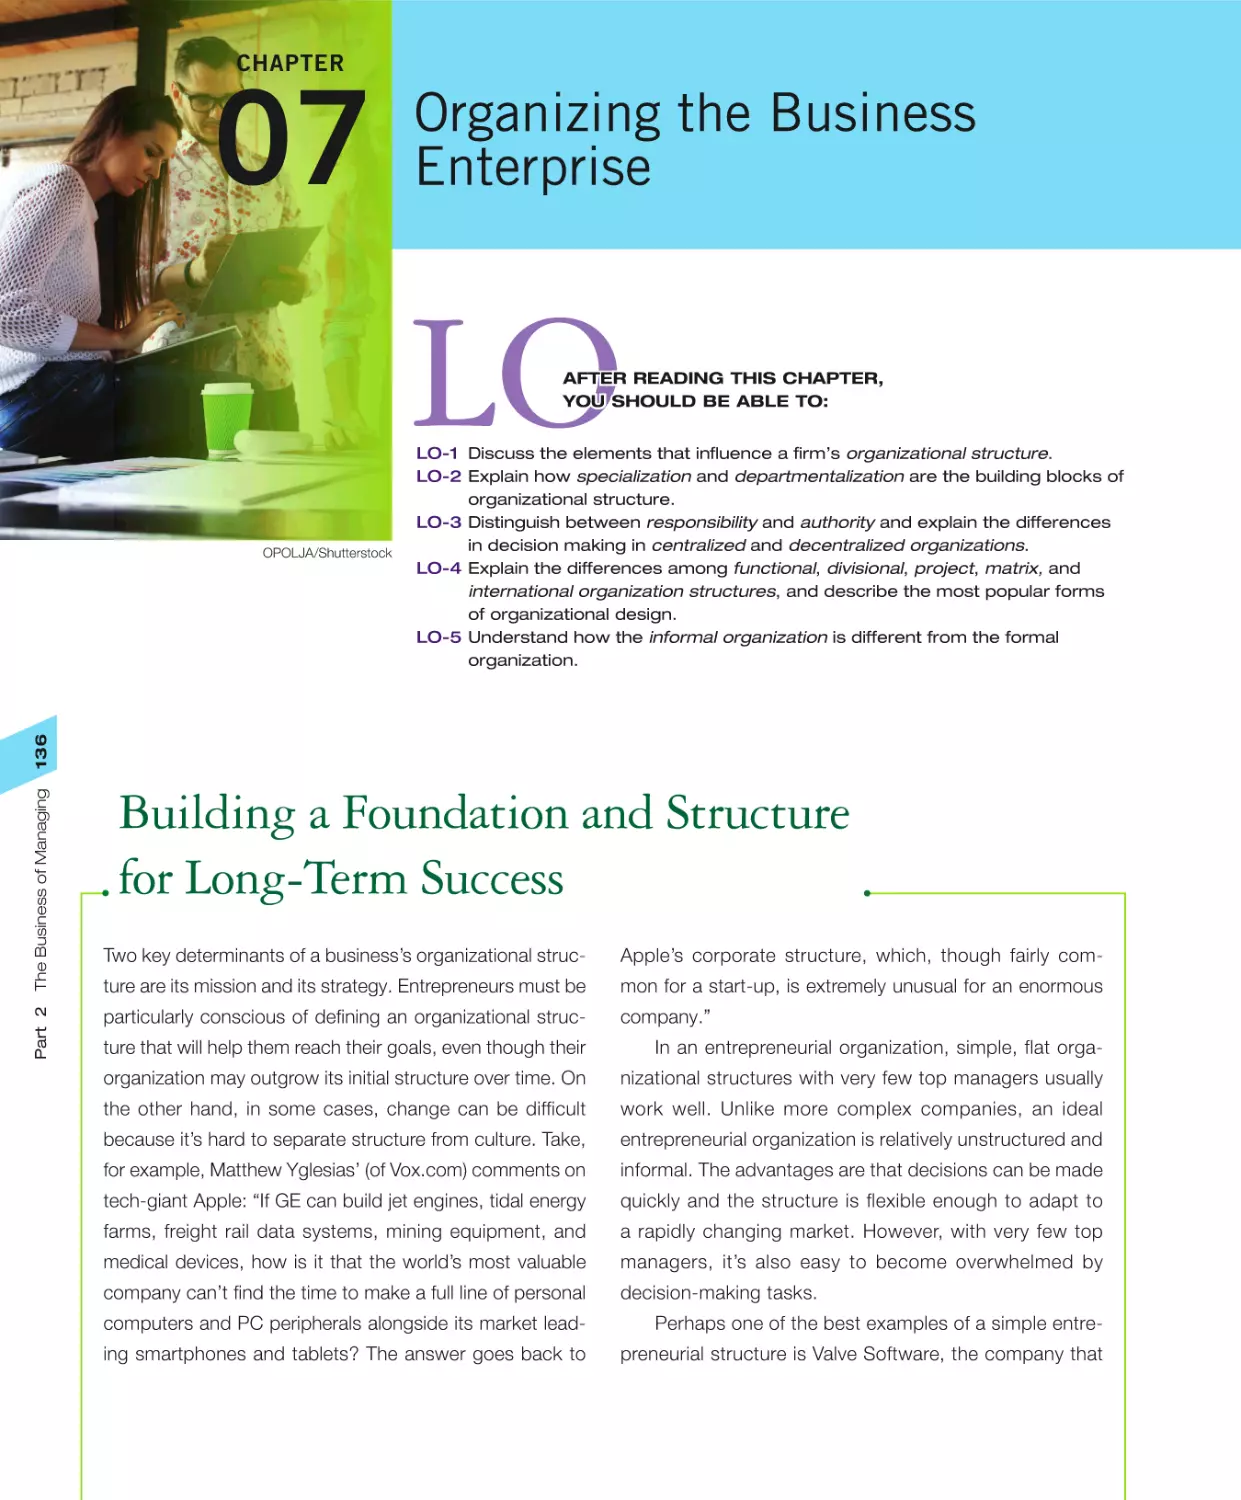 07 Organizing the Business Enterprise